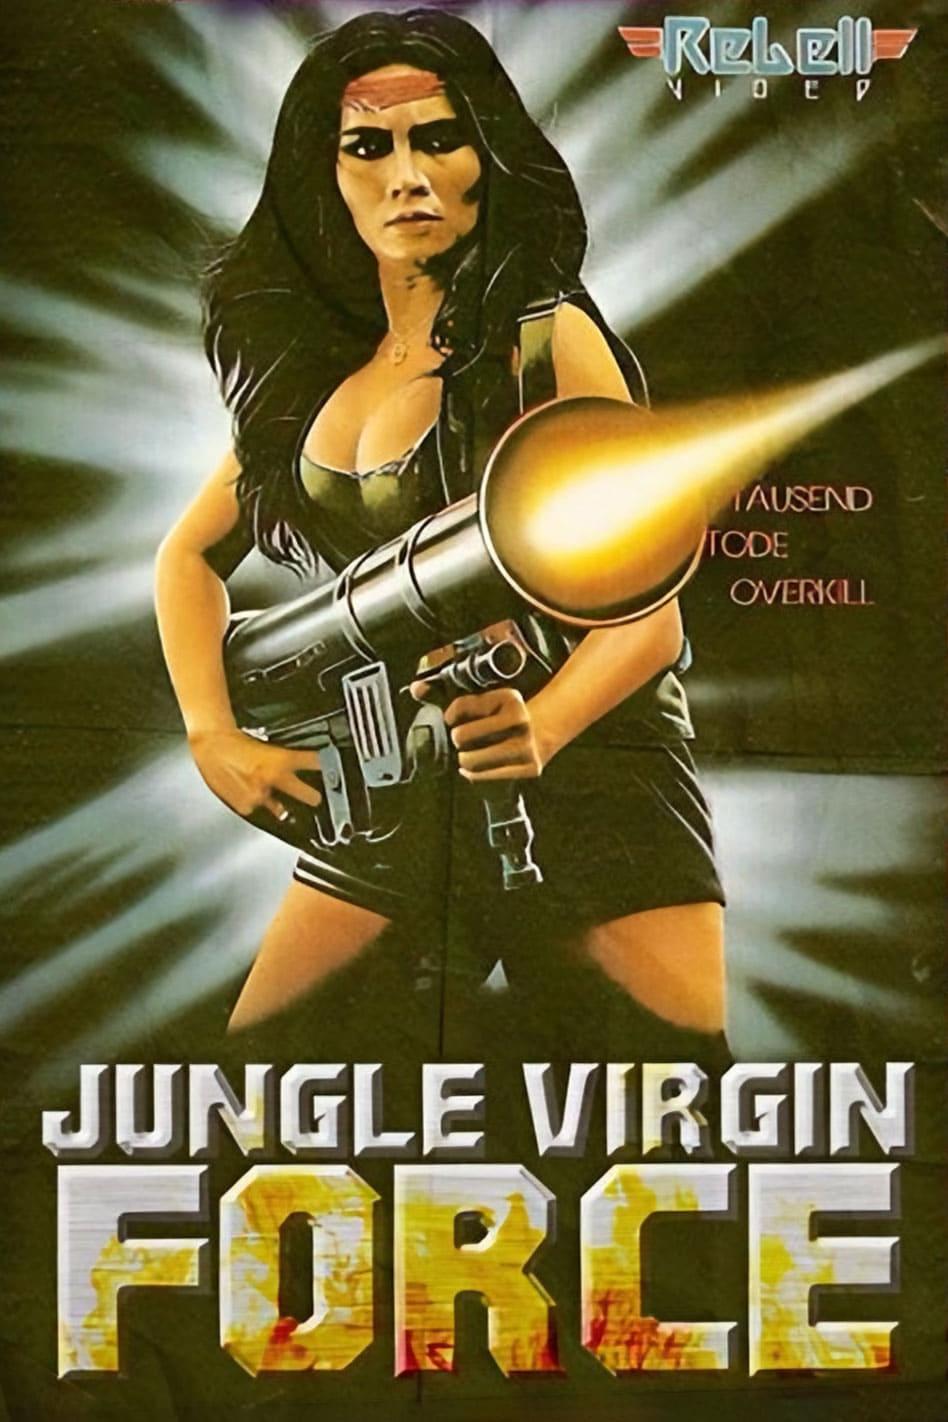 Jungle Virgin Force poster